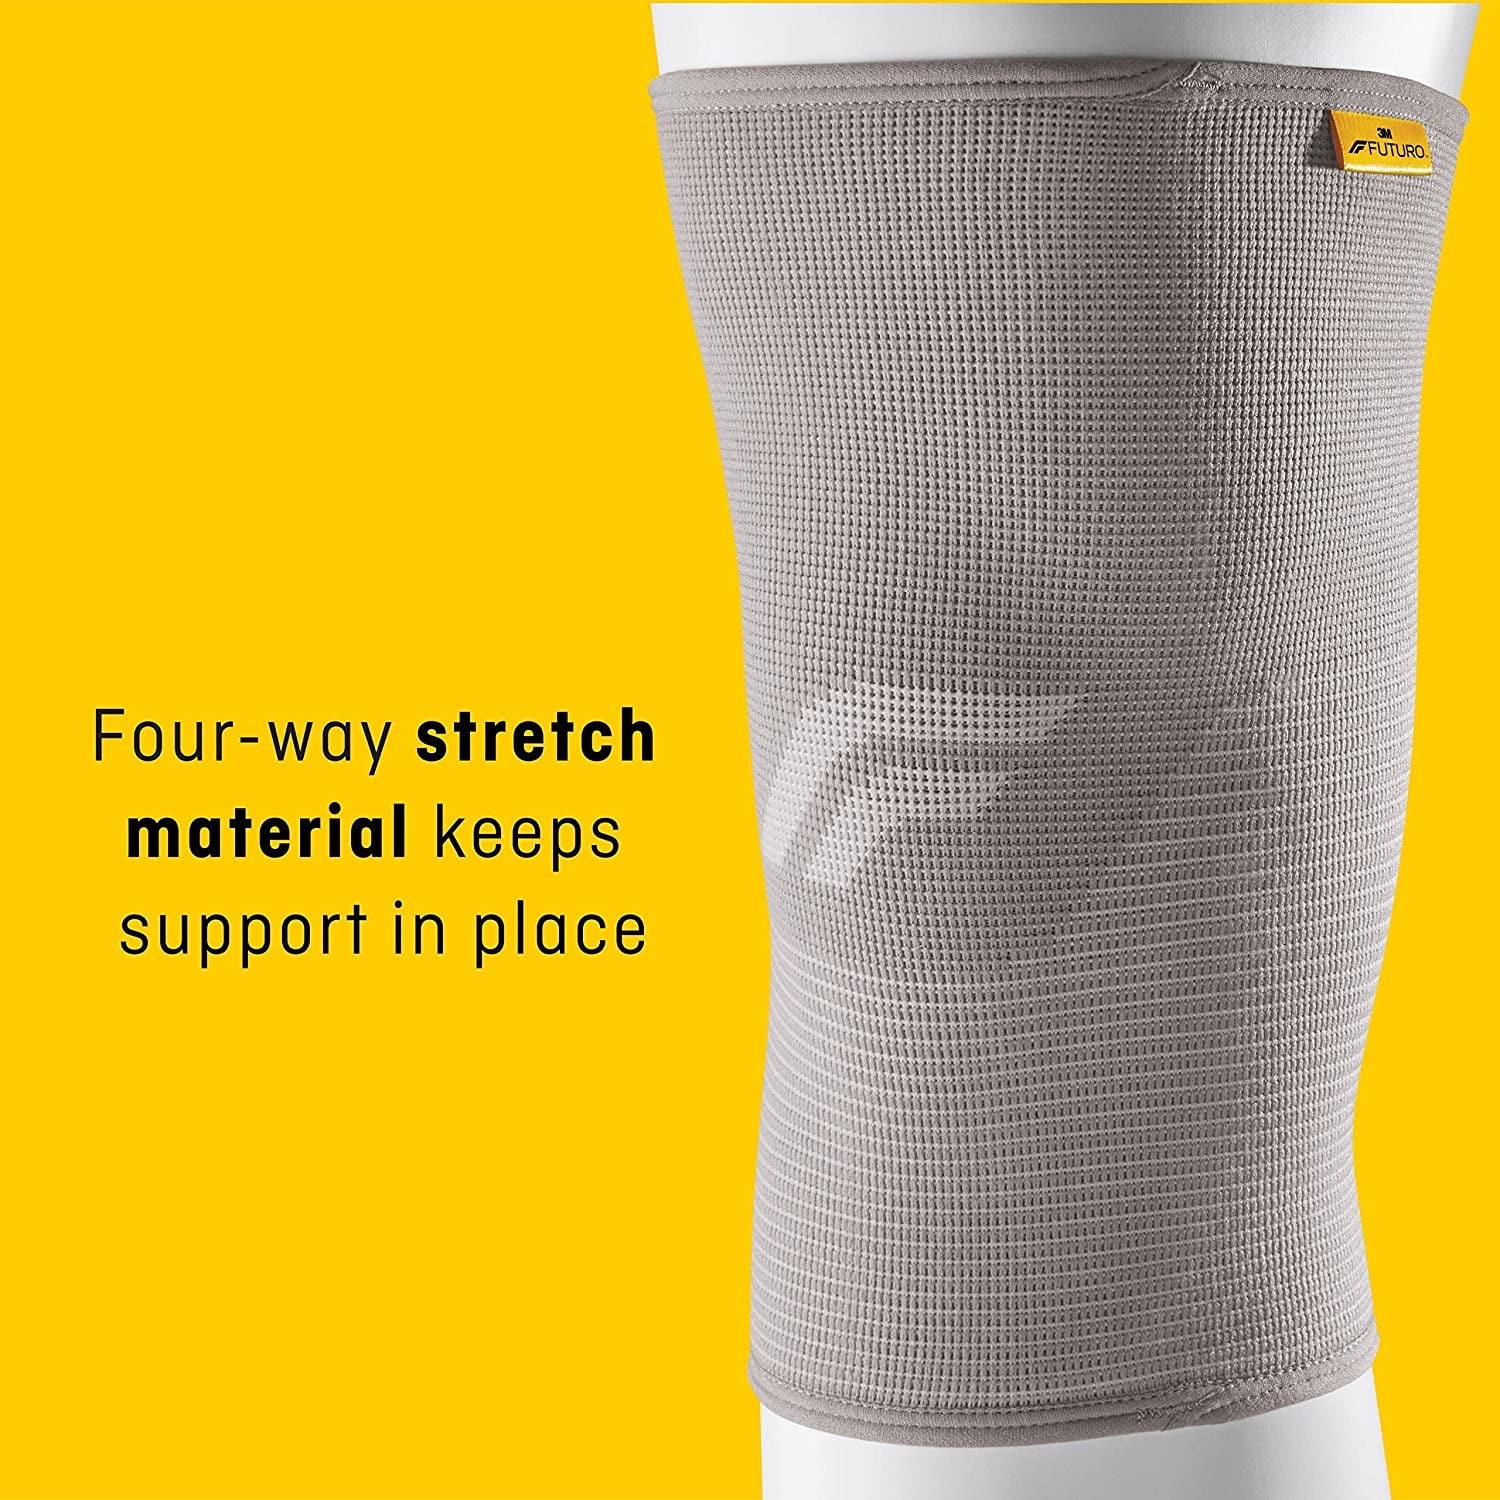 Futuro Comfort Lift Knee Support, Large